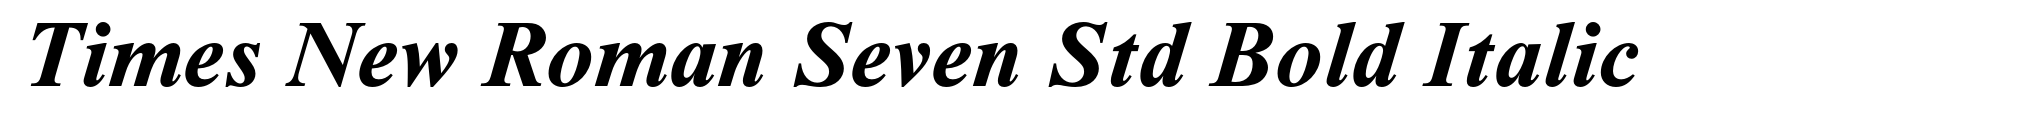 Times New Roman Seven Std Bold Italic image